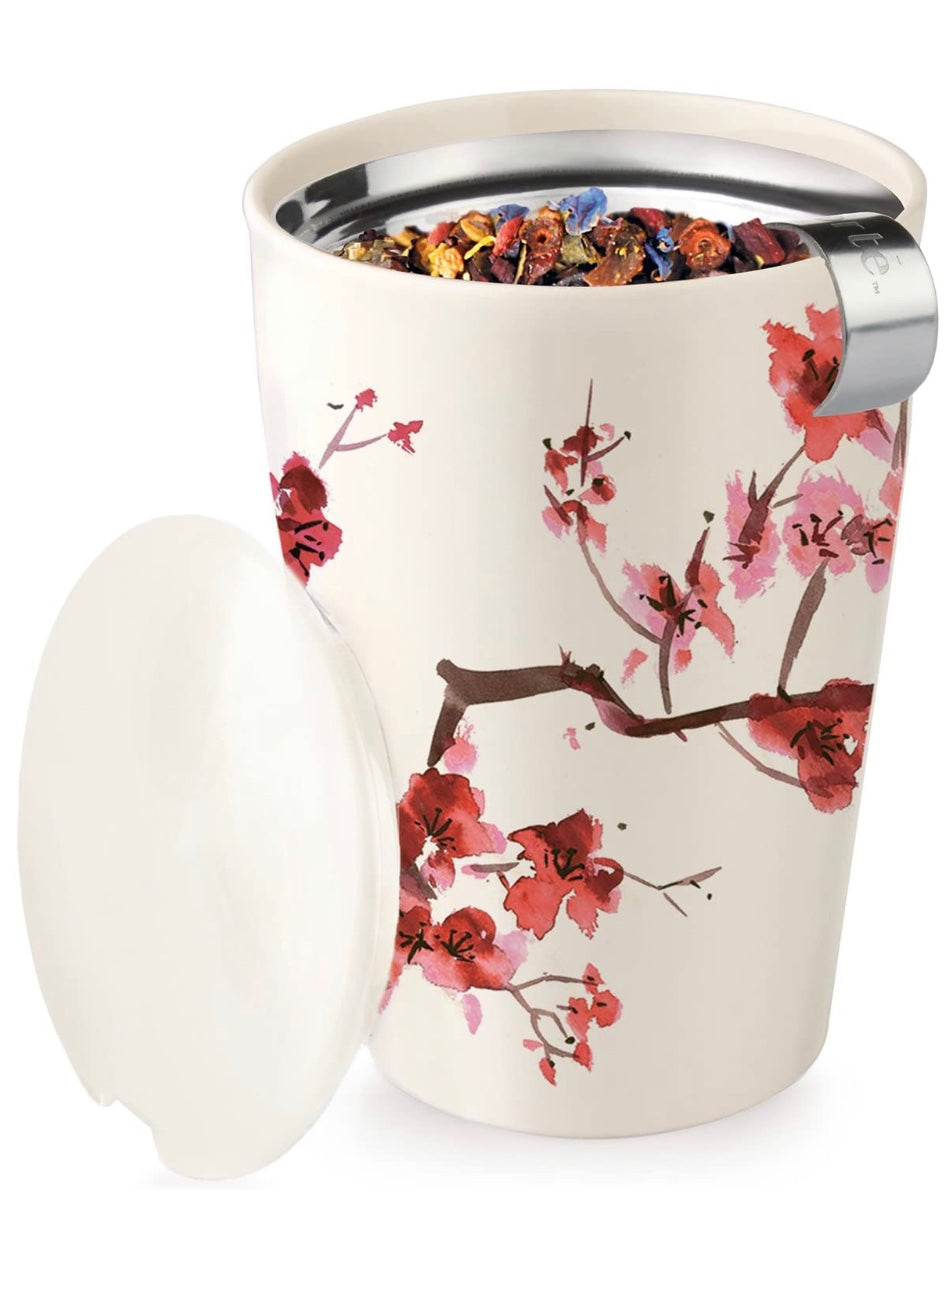 Tea forte ceramic lid and infuser